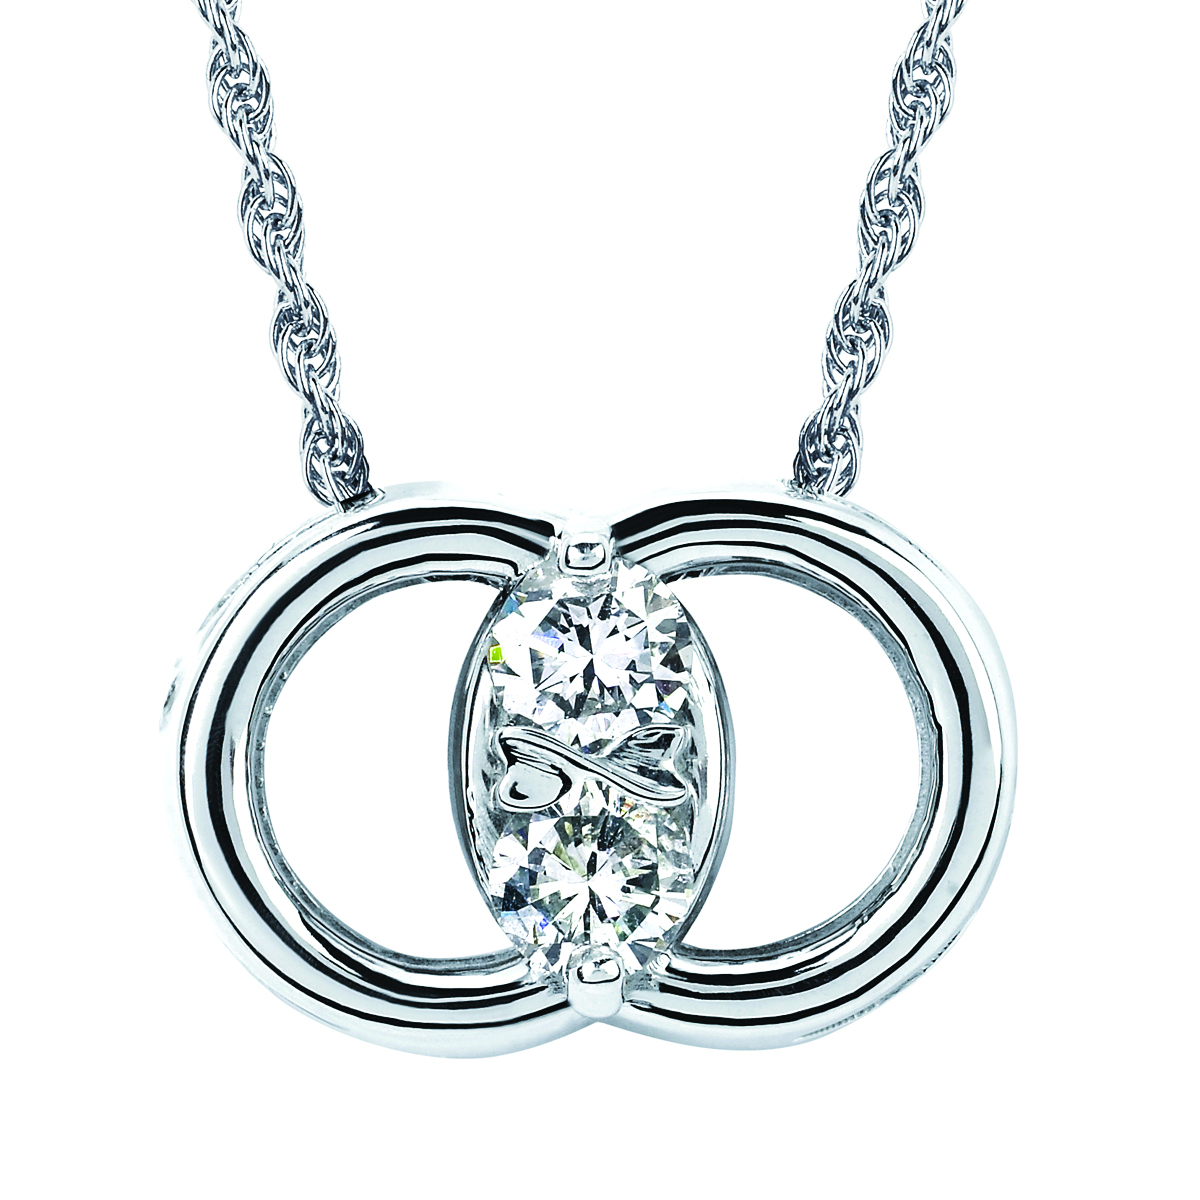 Diamond Marriage Symbol